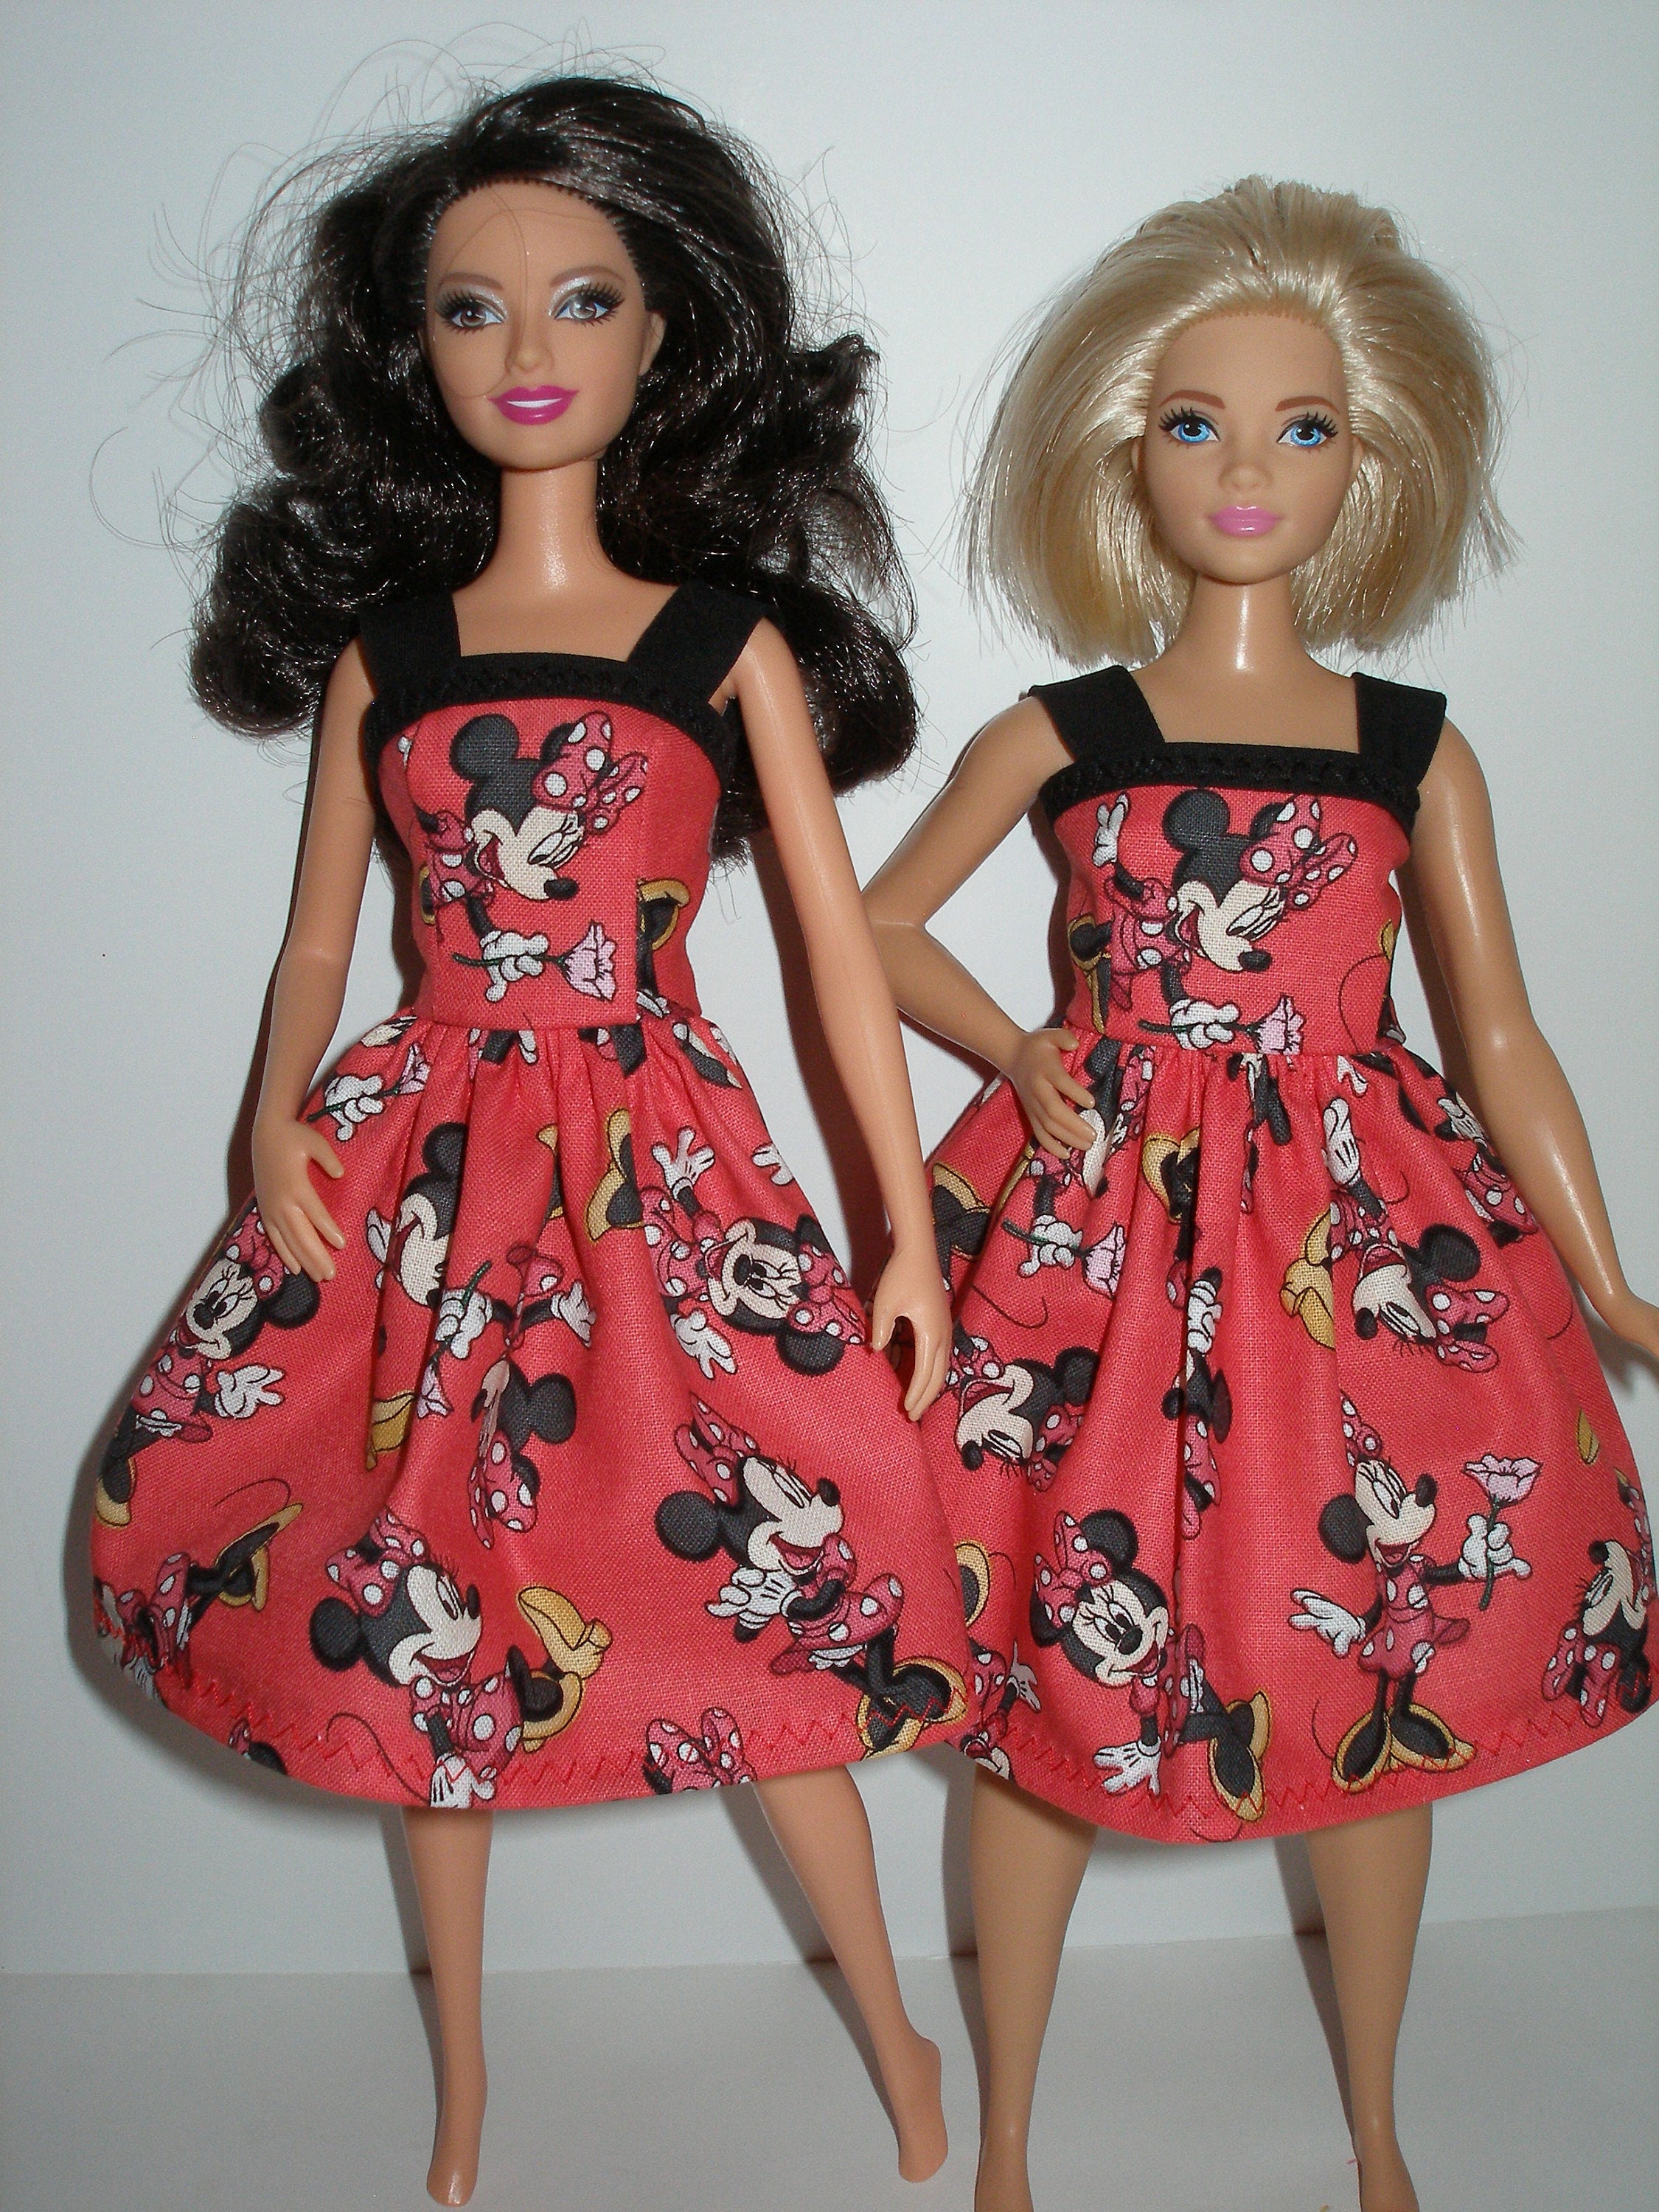 Netto Kansen Zuidelijk Handmade 11.5 Fashion Doll Clothes Fits Barbie Clothes - Etsy